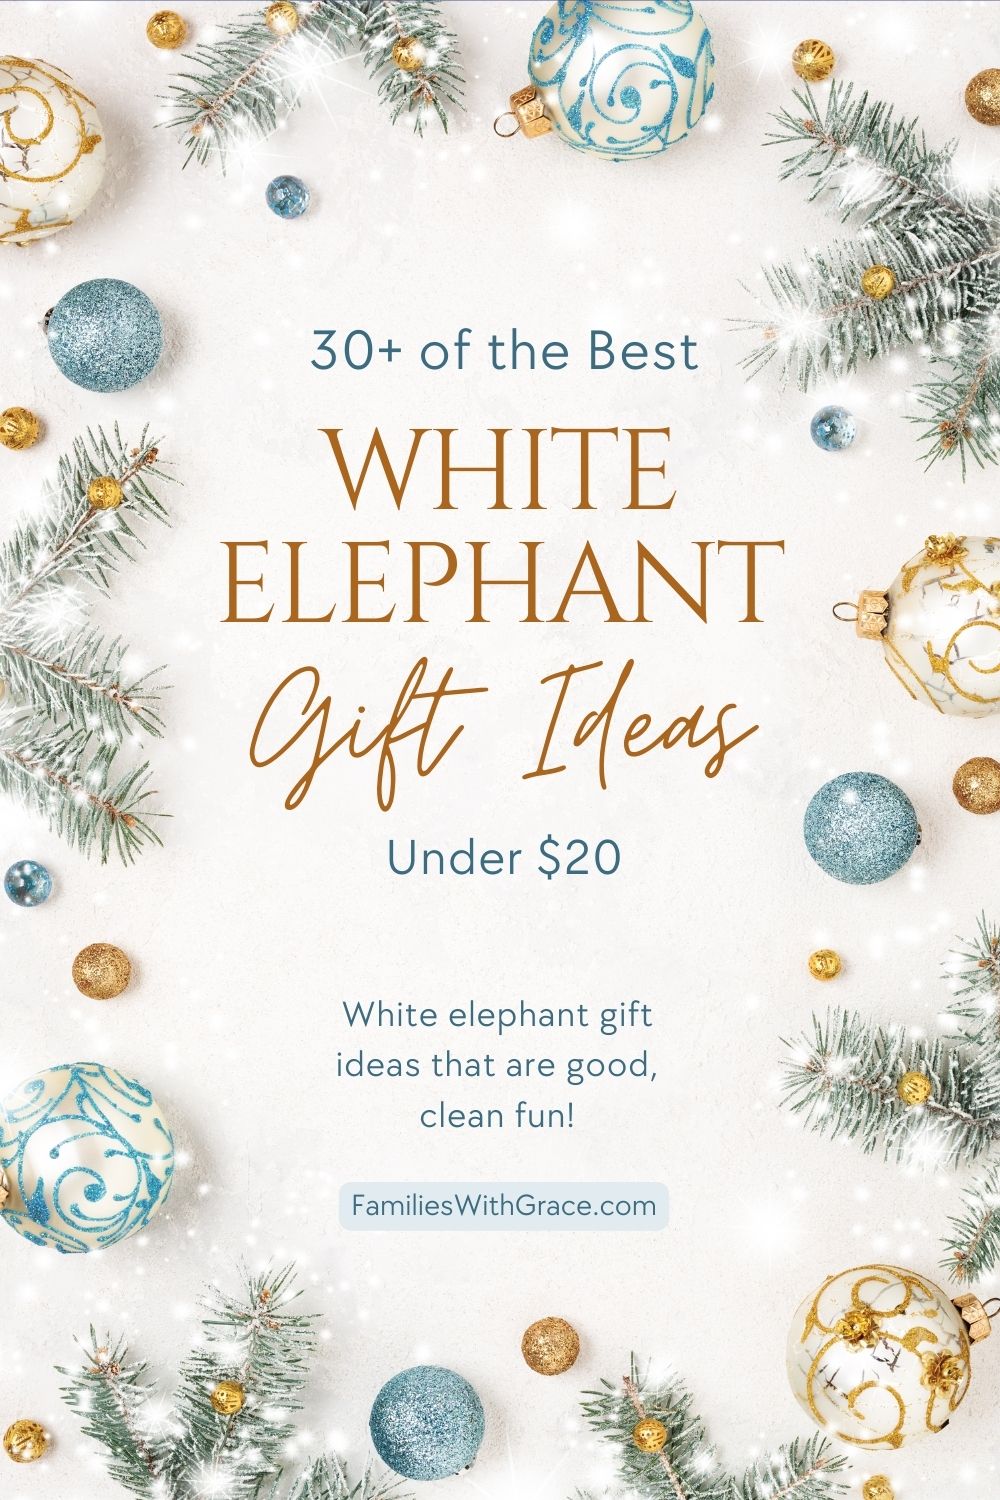 White Elephant Gift Ideas Under $30 - The Gift of Fun